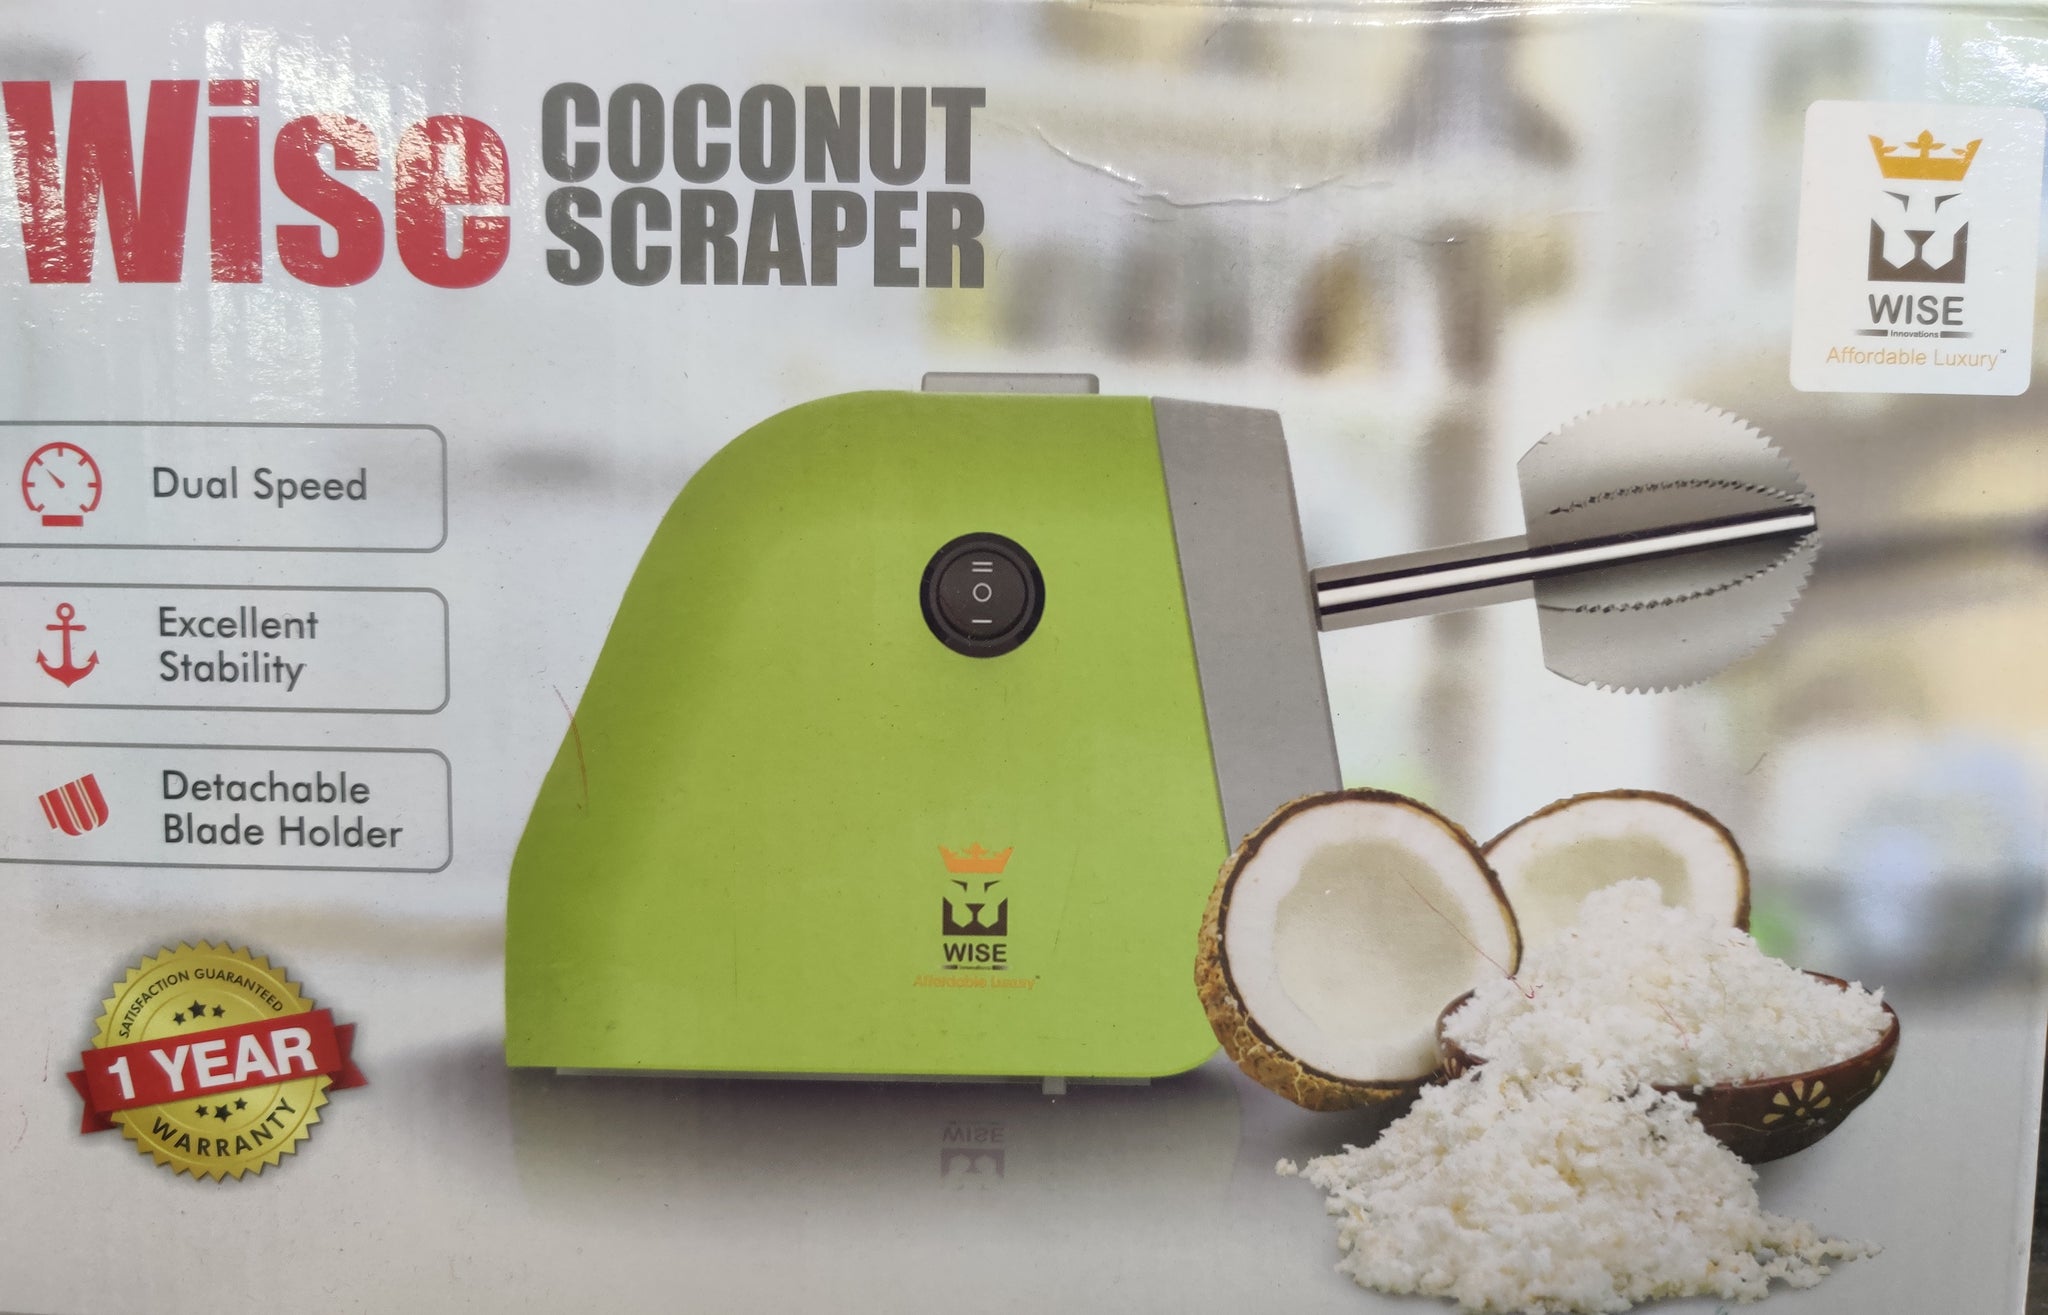 Electric Coconut Grater Scraper Shredder 120V 100Watts Wise